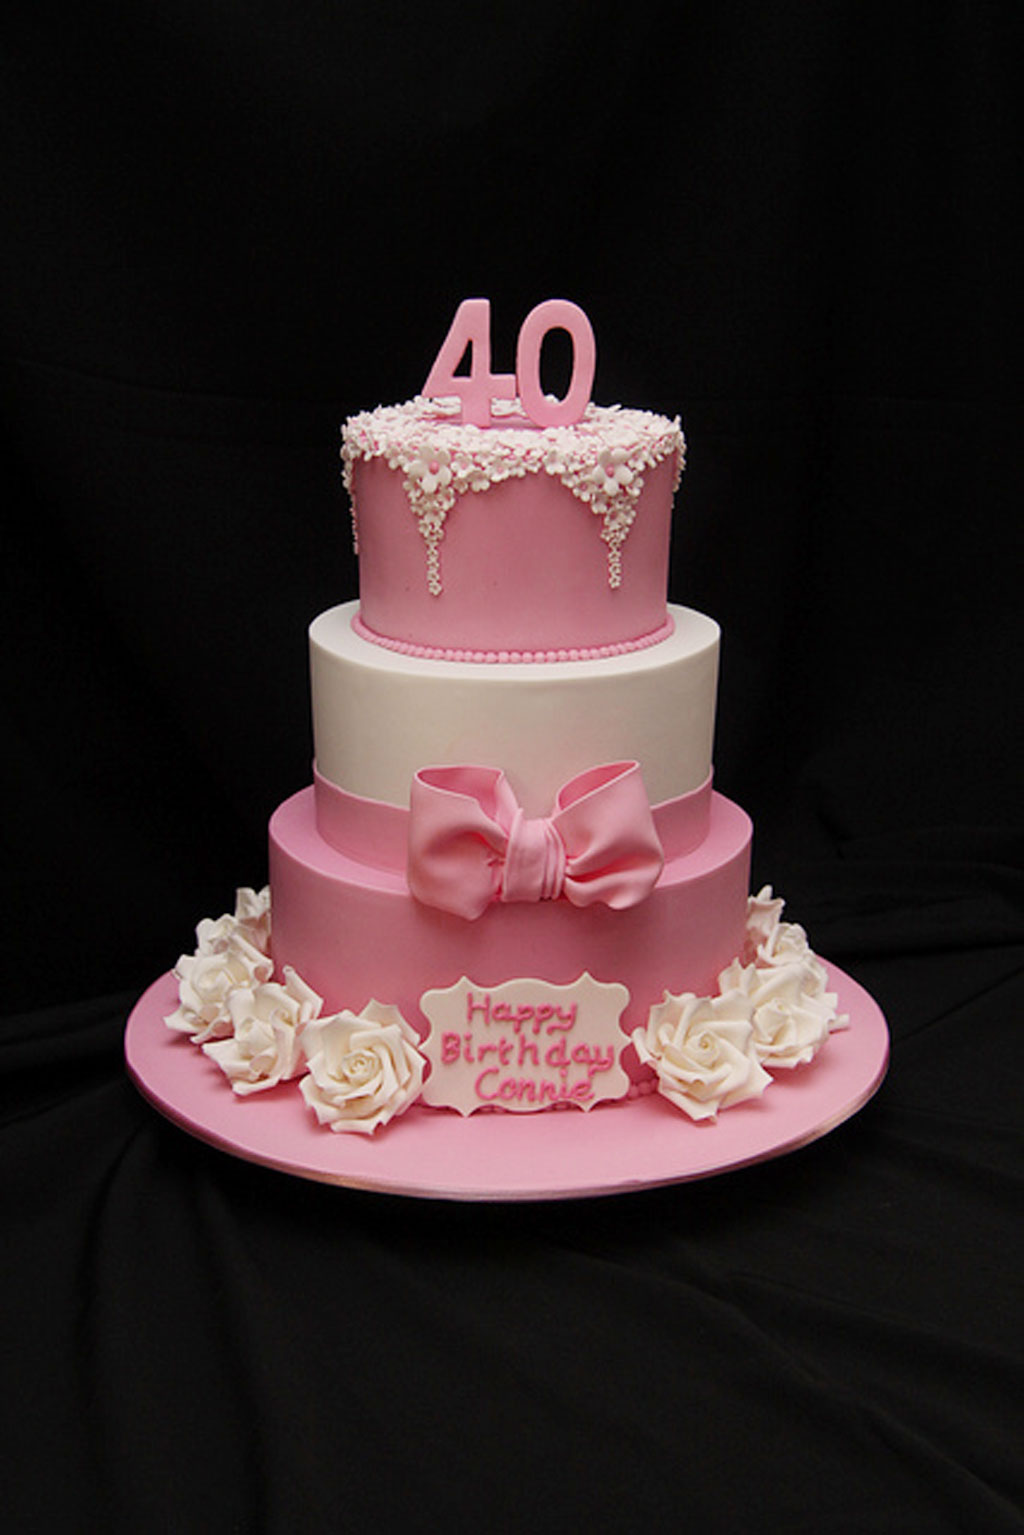 40th Birthday Cakes Recipe in Cake Ideas by Prayface.net : Cake Ideas ...